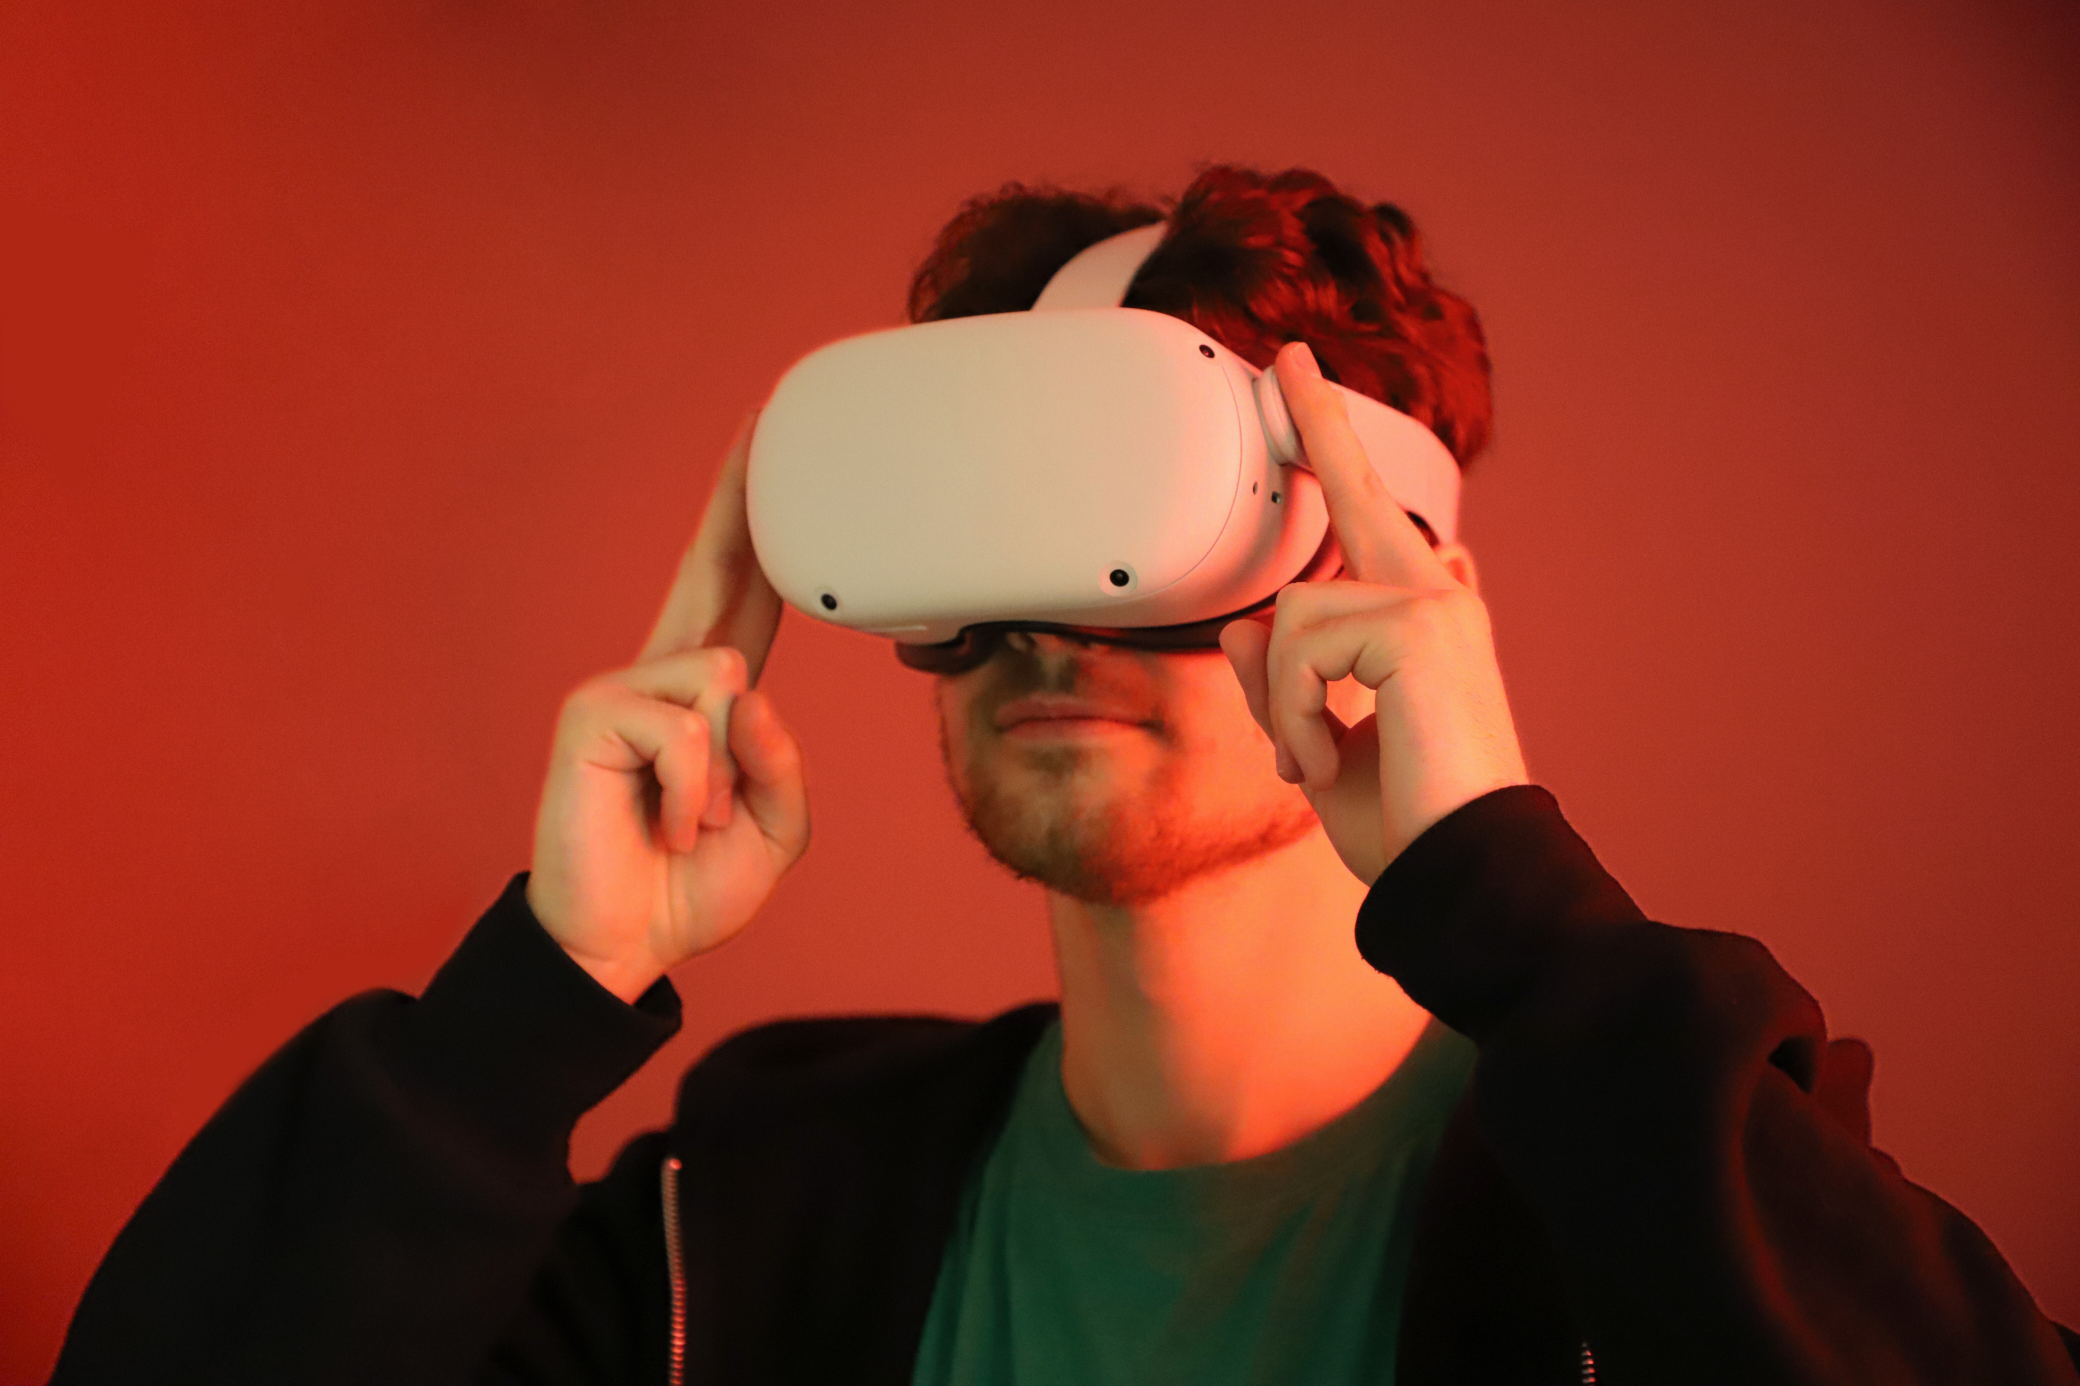 student using VR headset